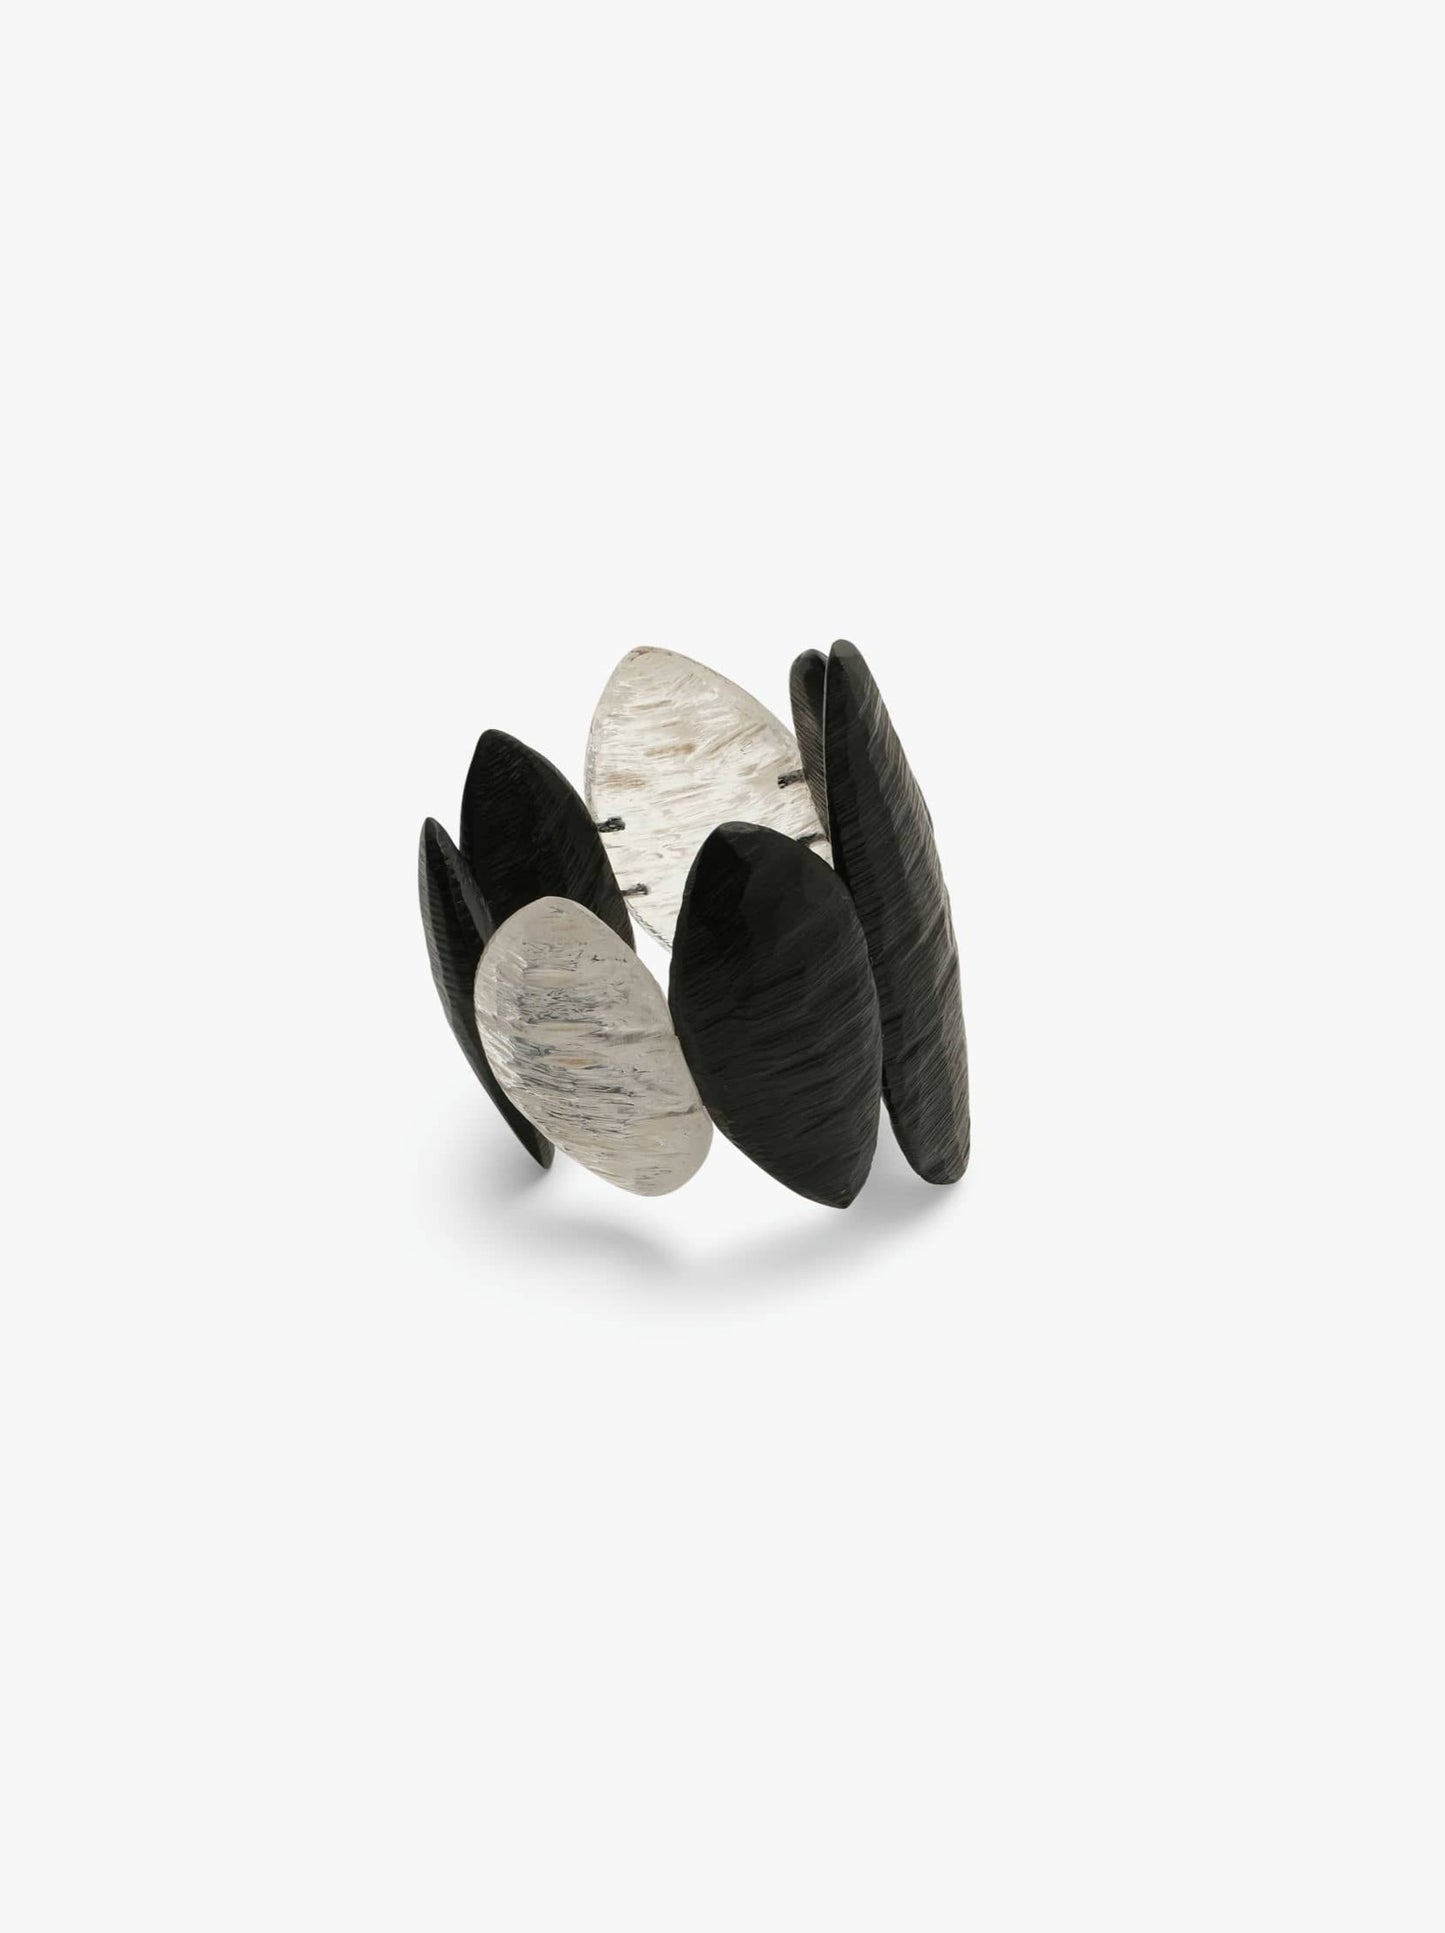 Bracelet: ebony, greencast acrylic